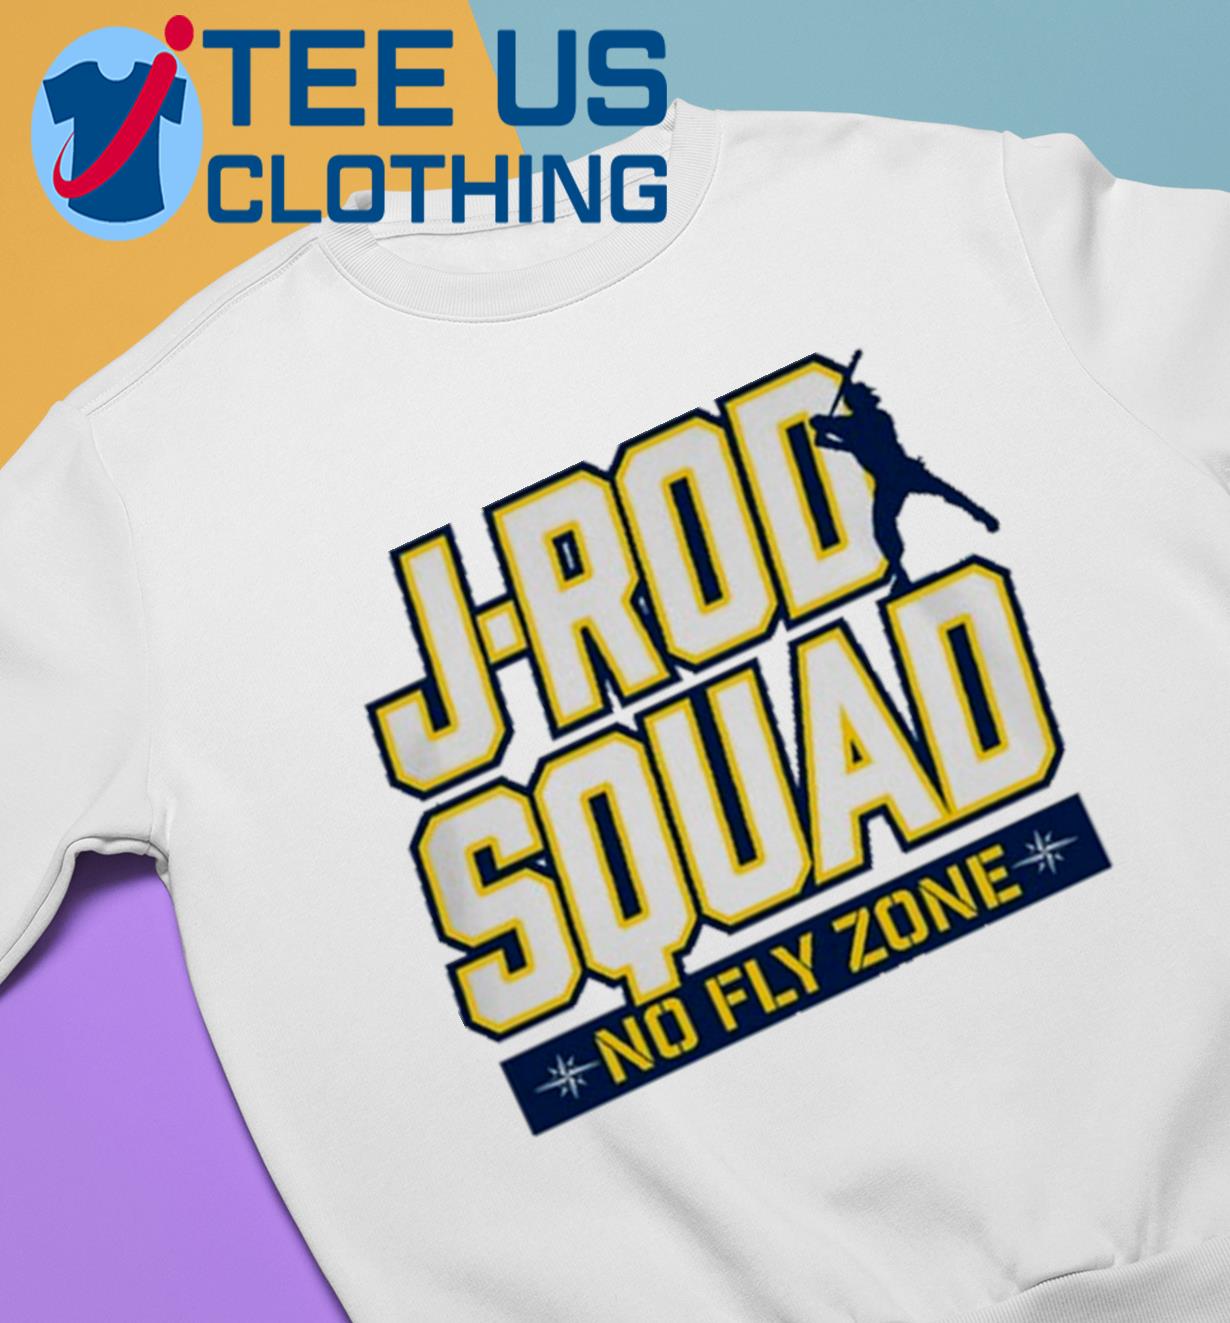 Julio Rodriguez J-Rod Squad No Fly Zone 2023 Shirt, hoodie